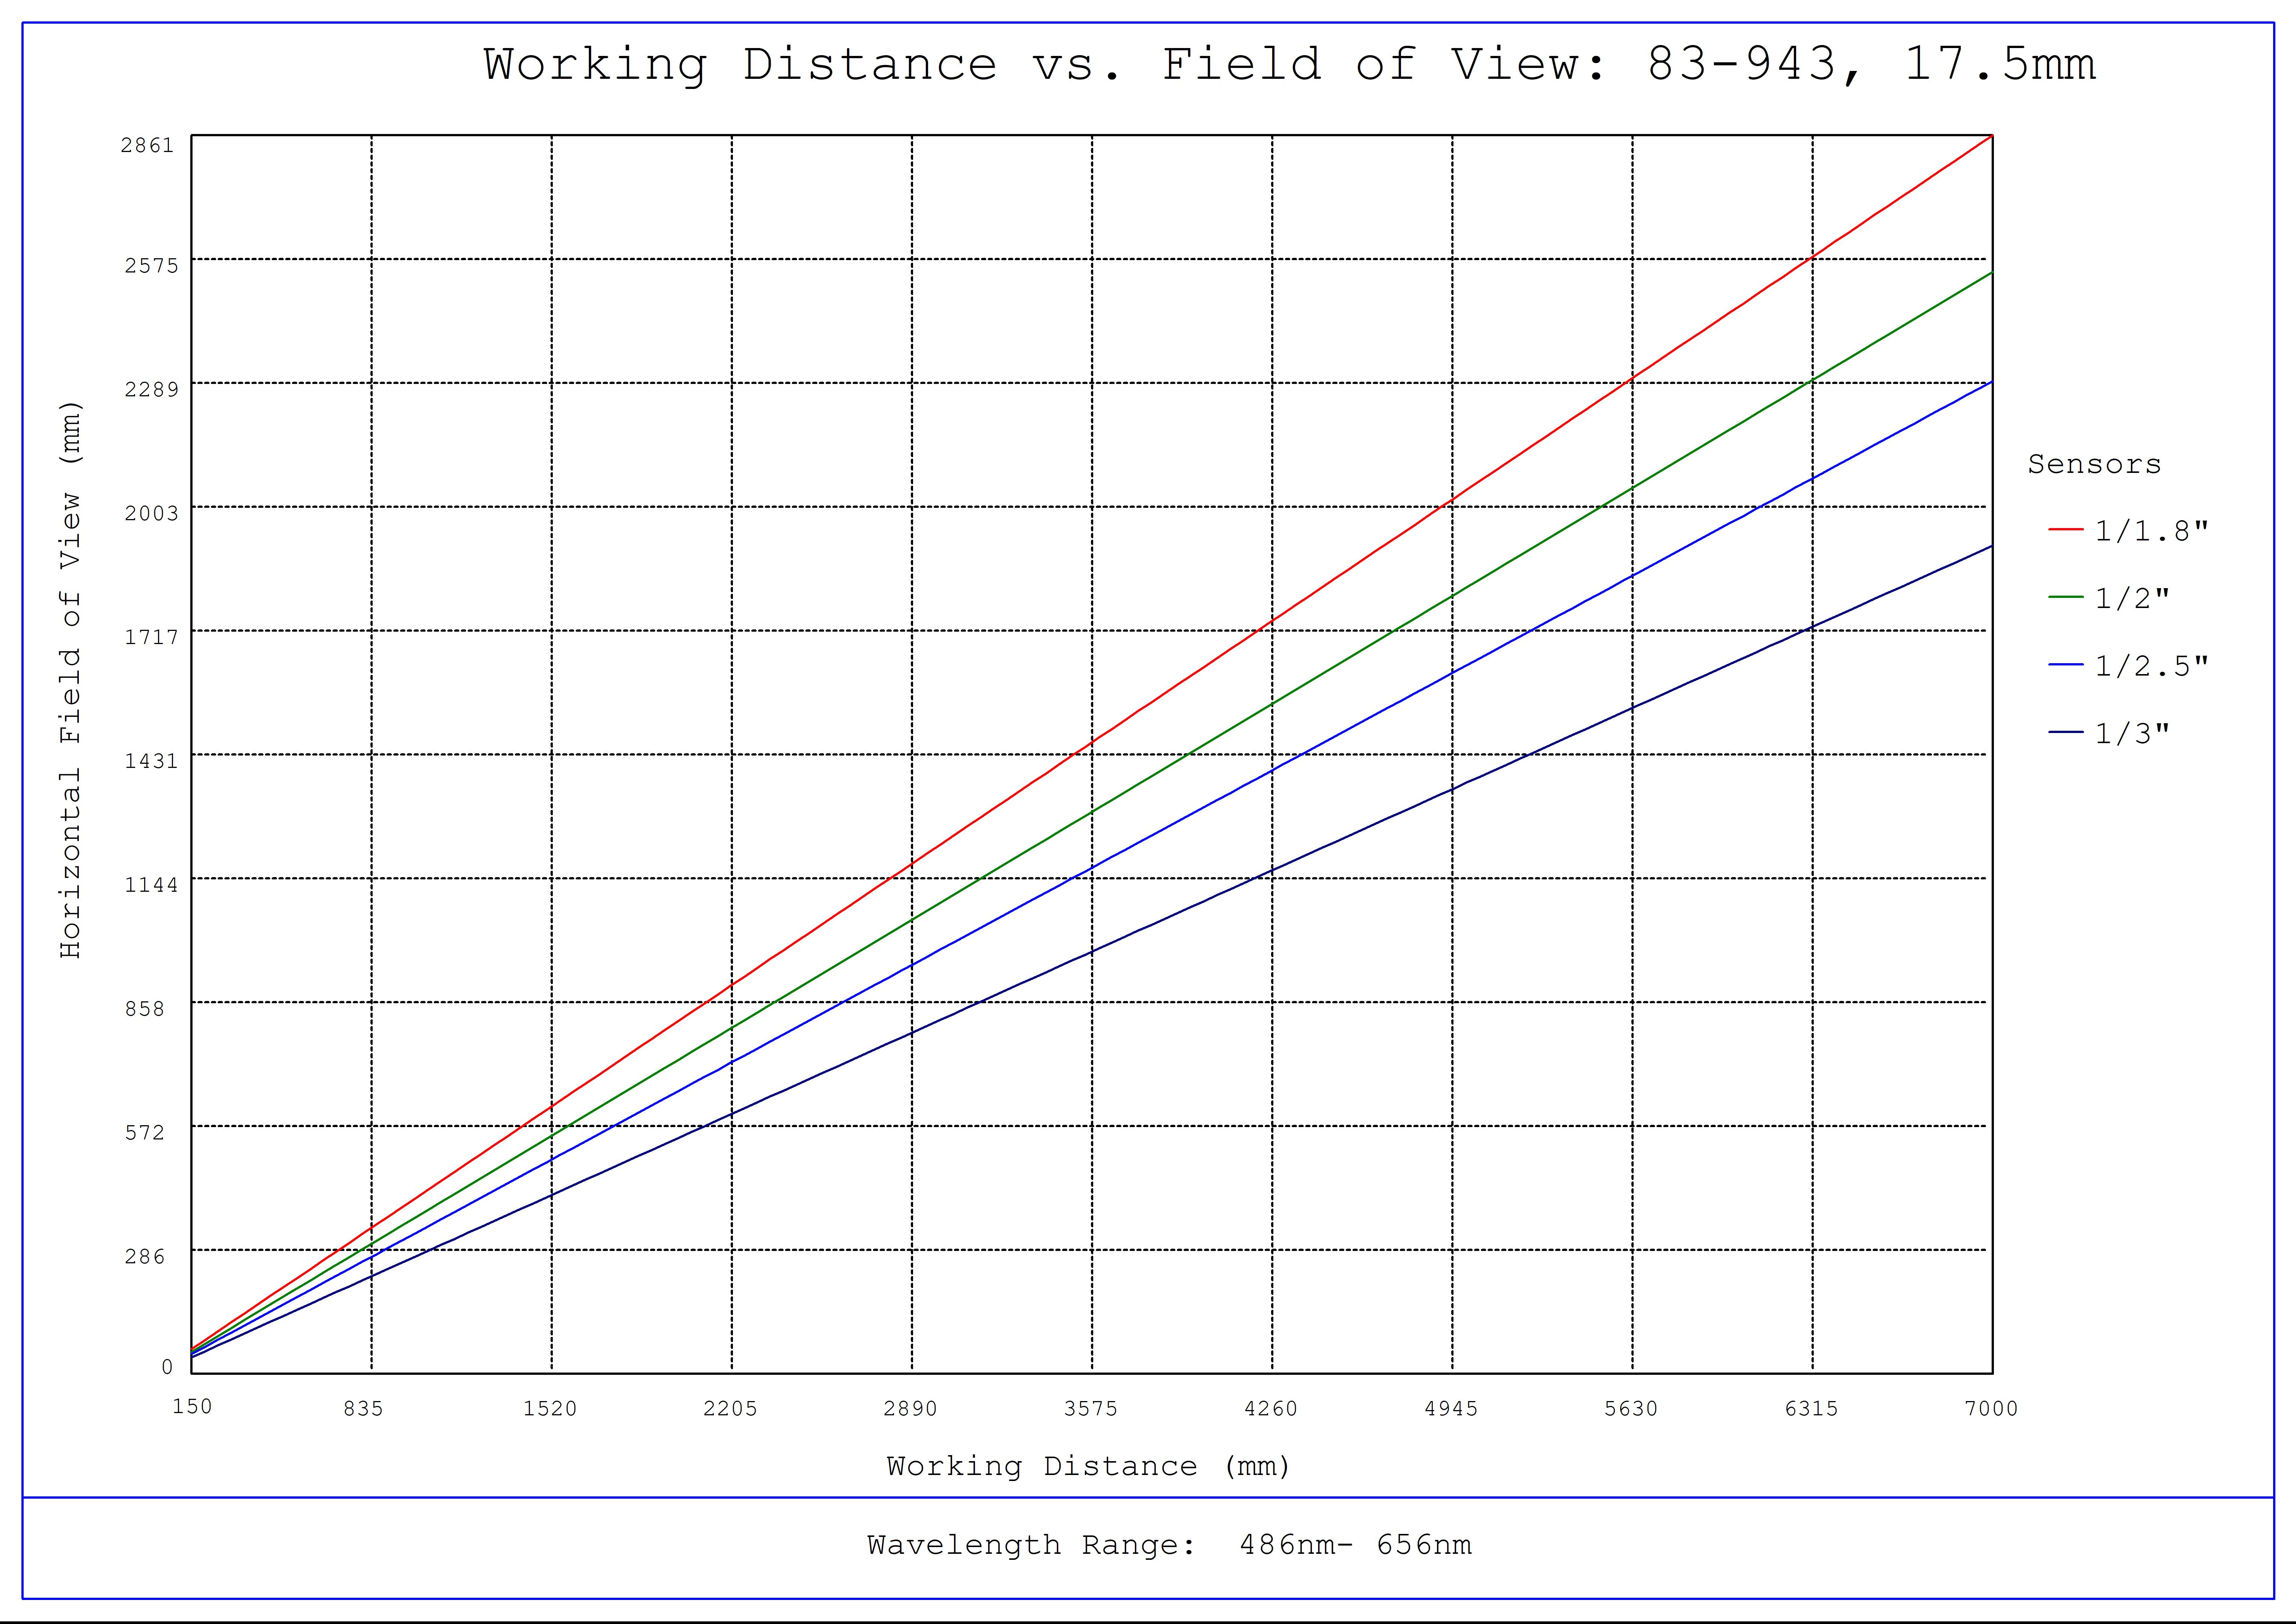 #83-943, 17.5mm FL f/5.6, Blue Series M12 Lens, Working Distance versus Field of View Plot